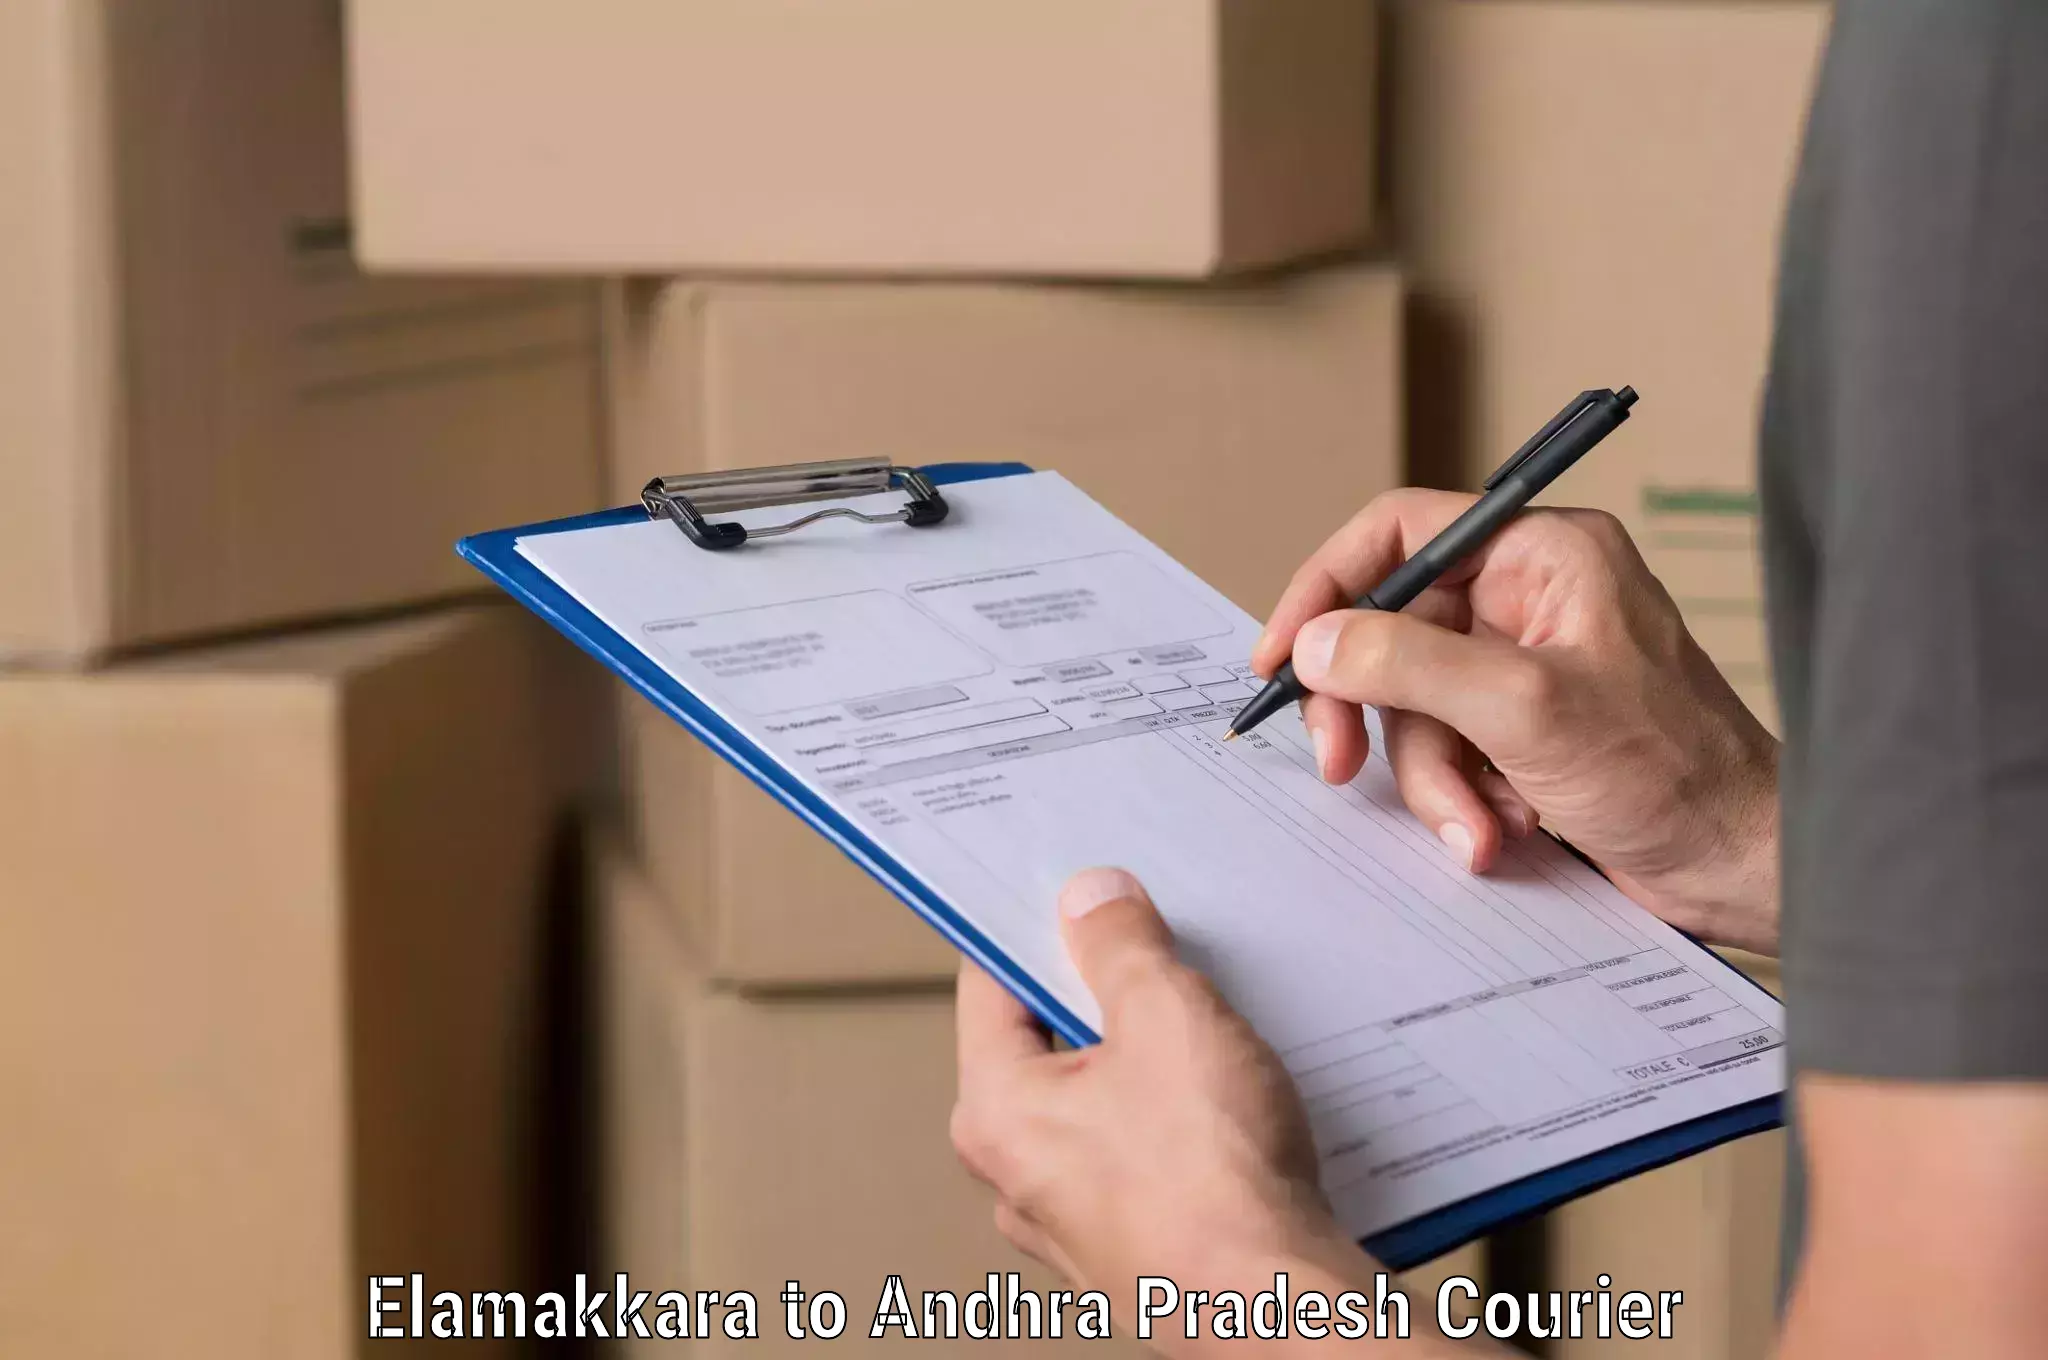 Professional courier handling Elamakkara to Visakhapatnam Port